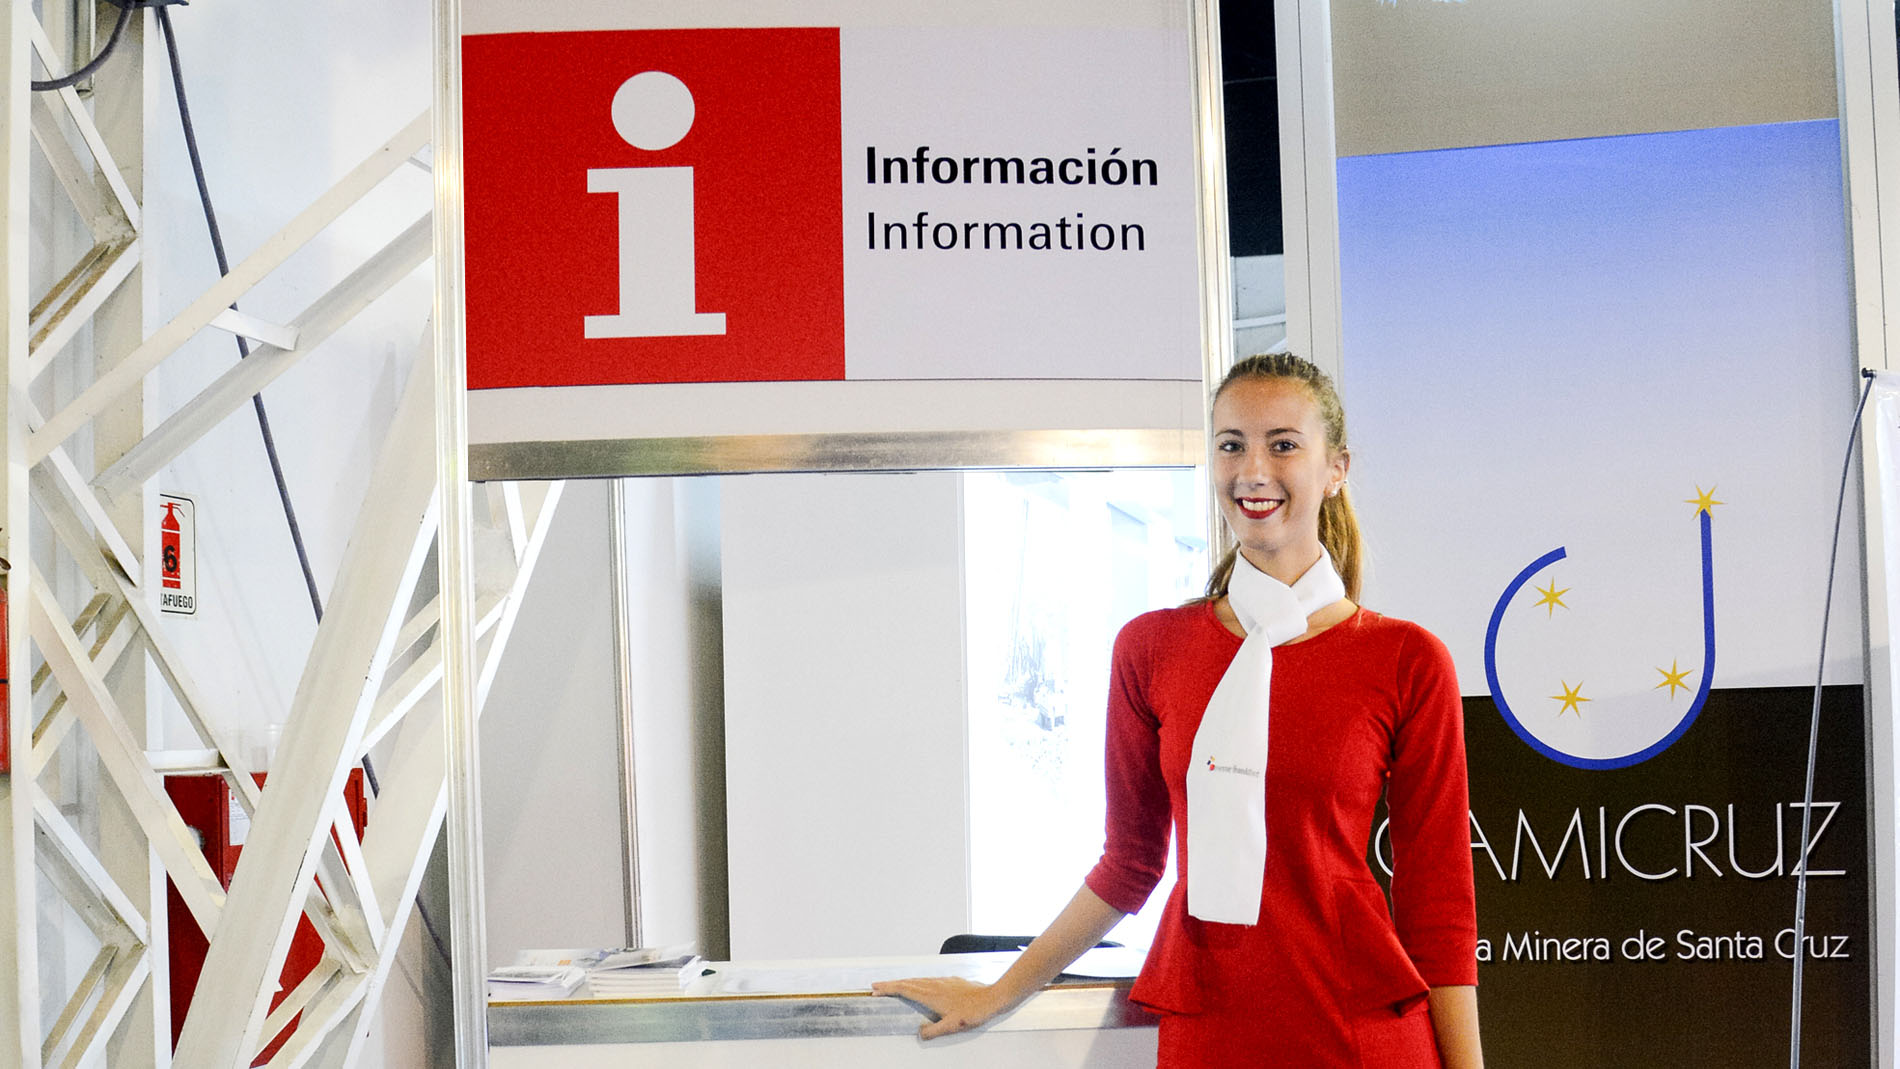 Arminera: Information booths